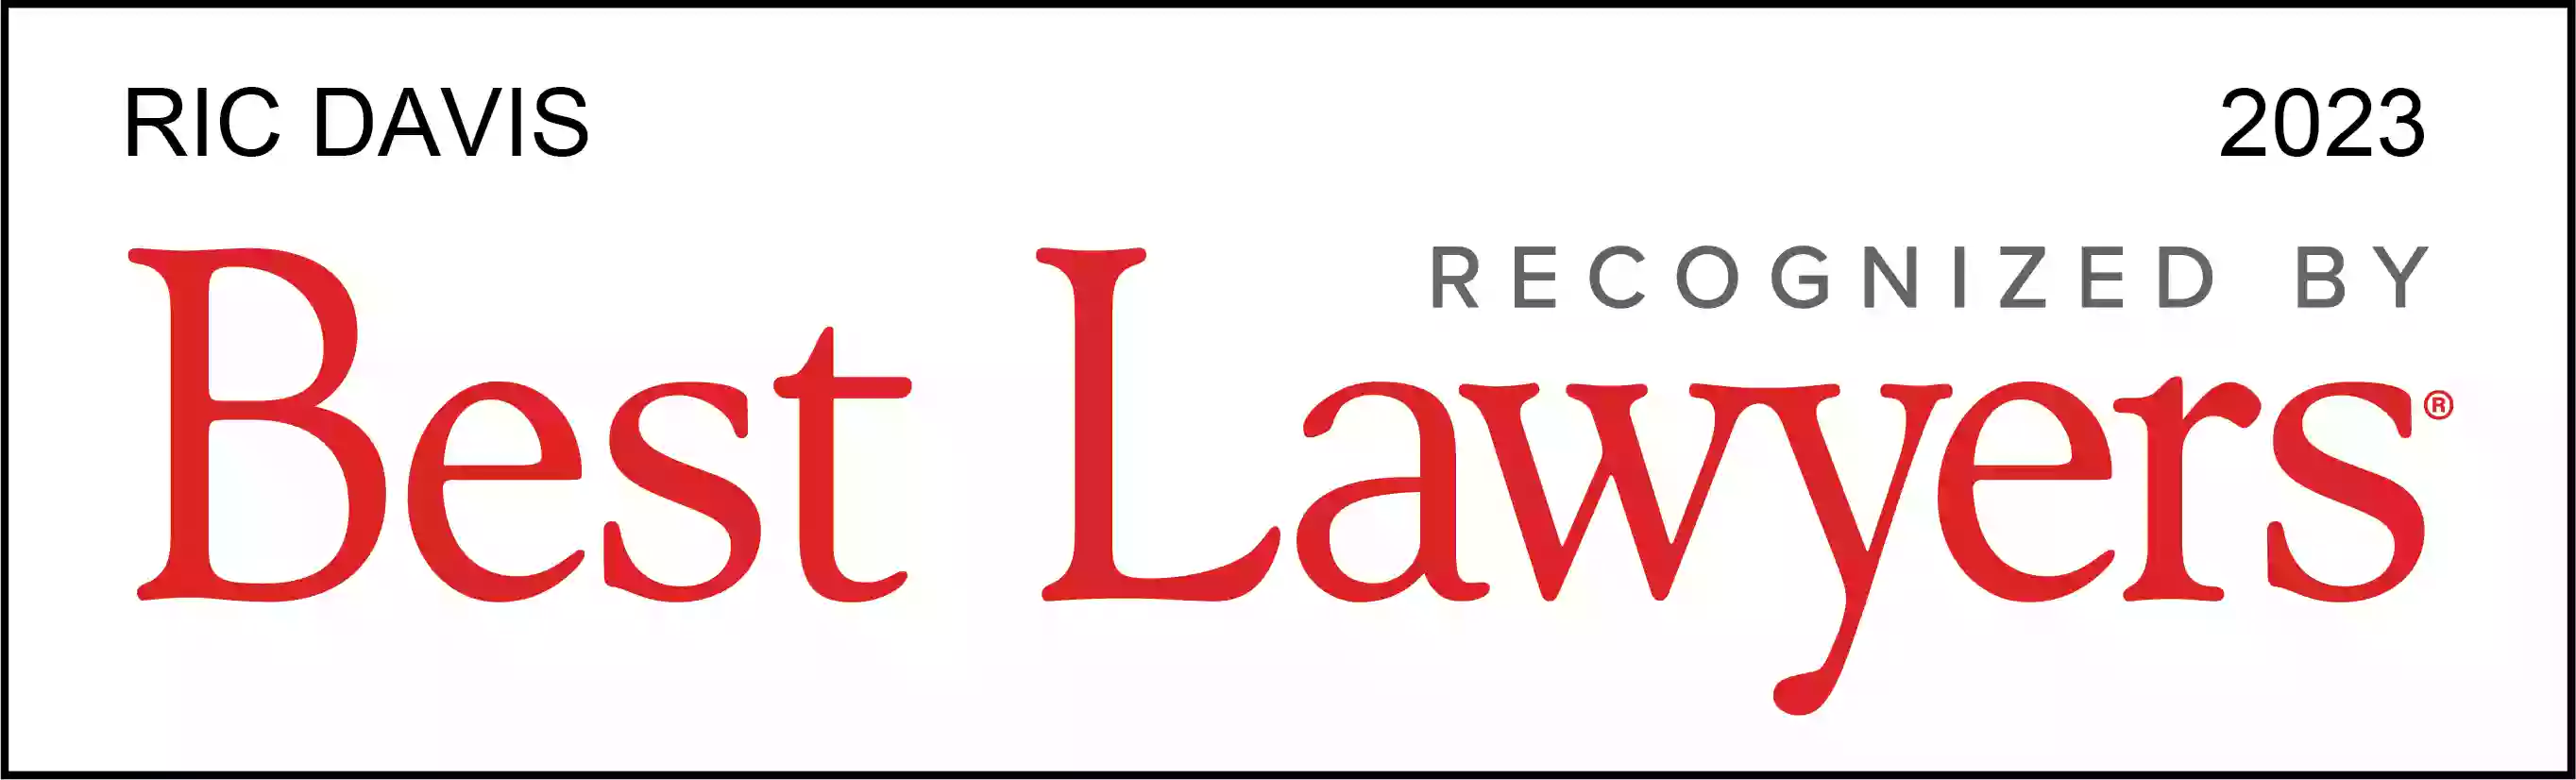 Davis Law Group